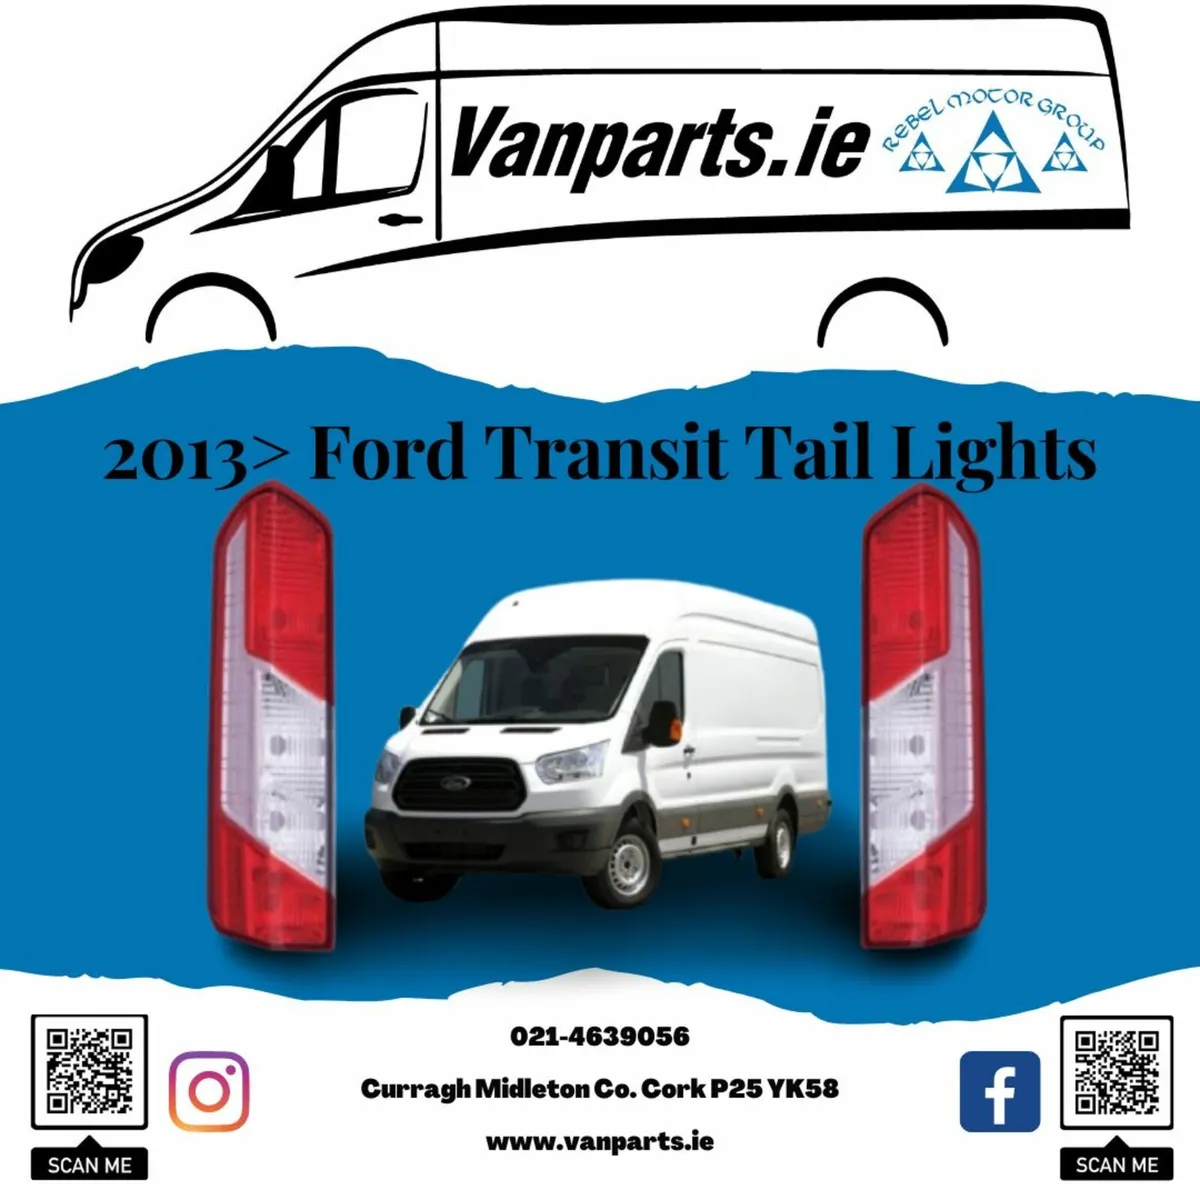 2013> Ford Transit Tail Lights